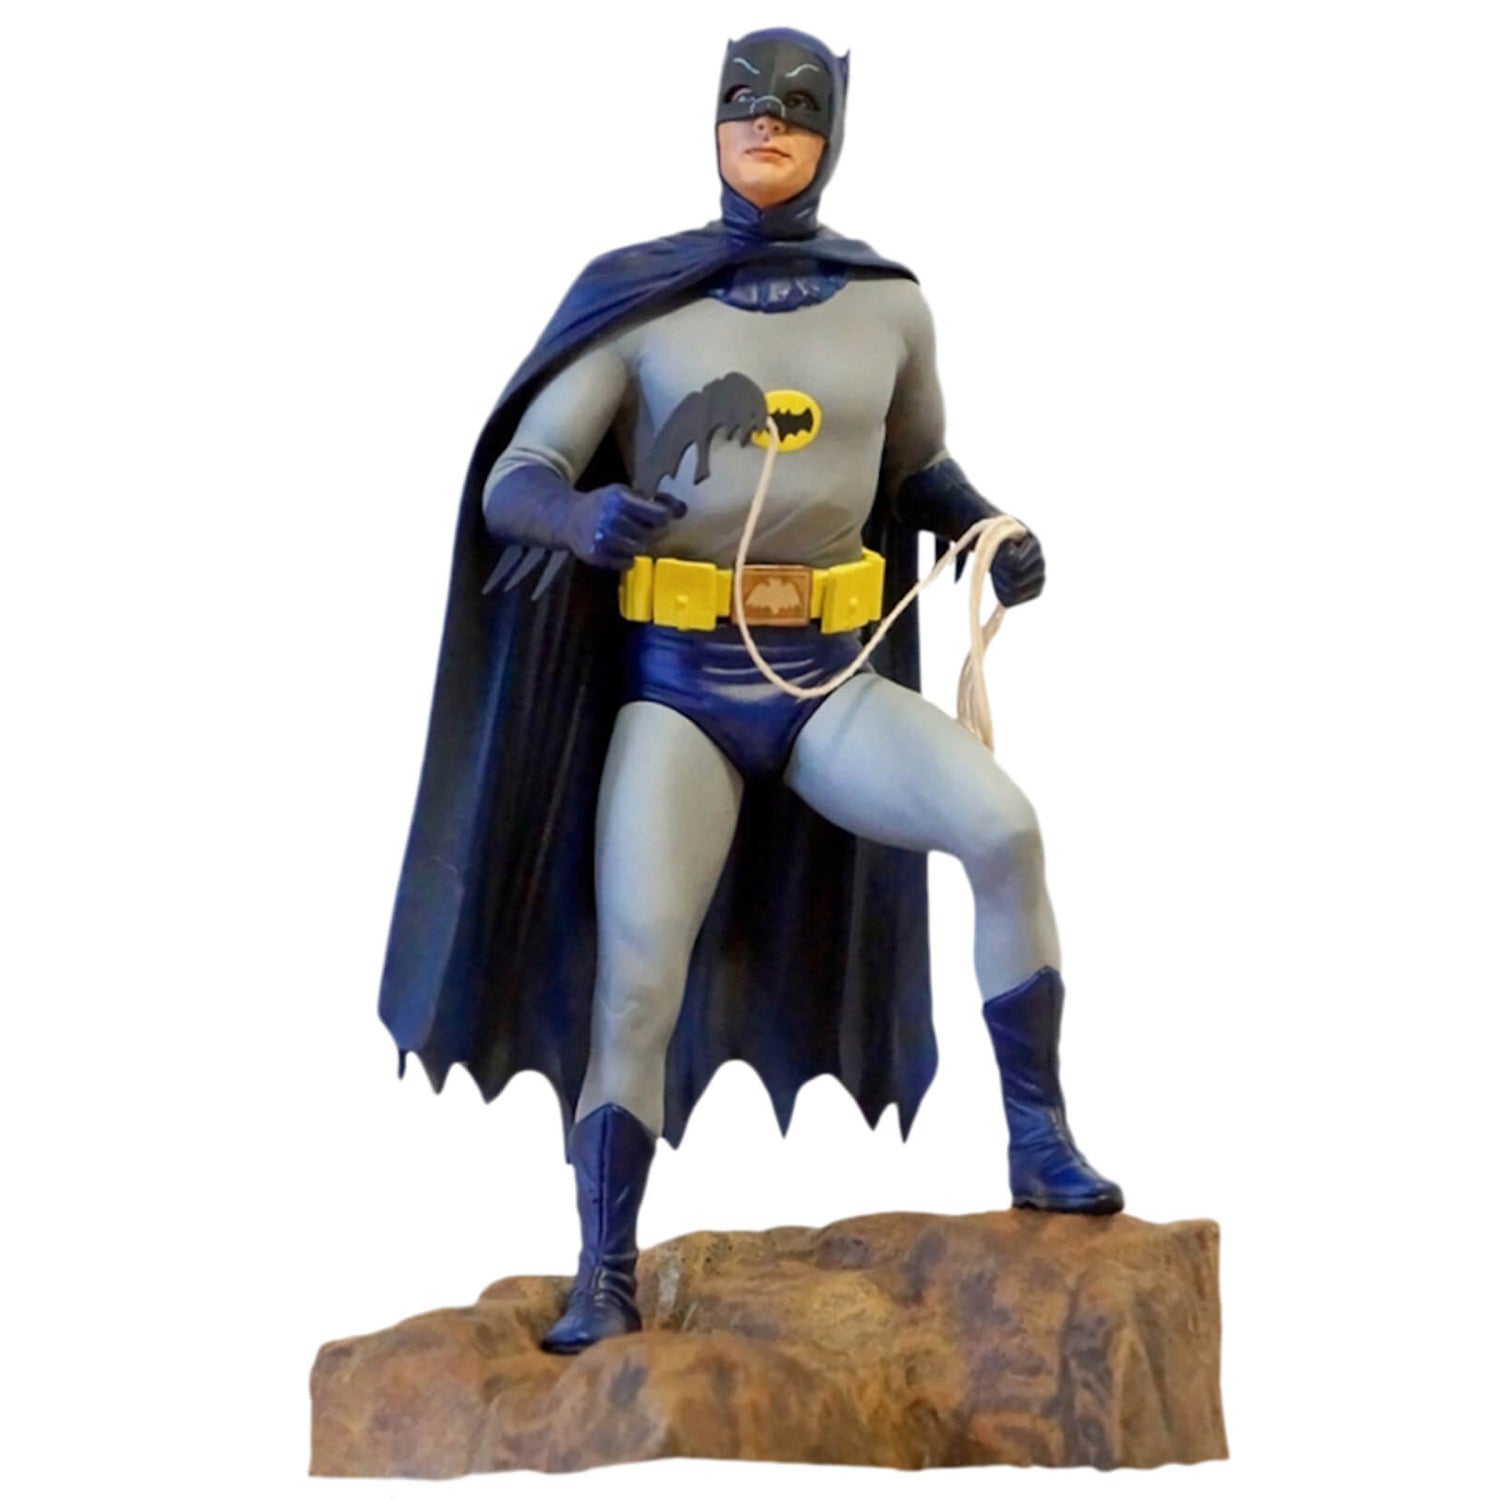 1:8 Adam West als Batman - Plastikmodellbausatz